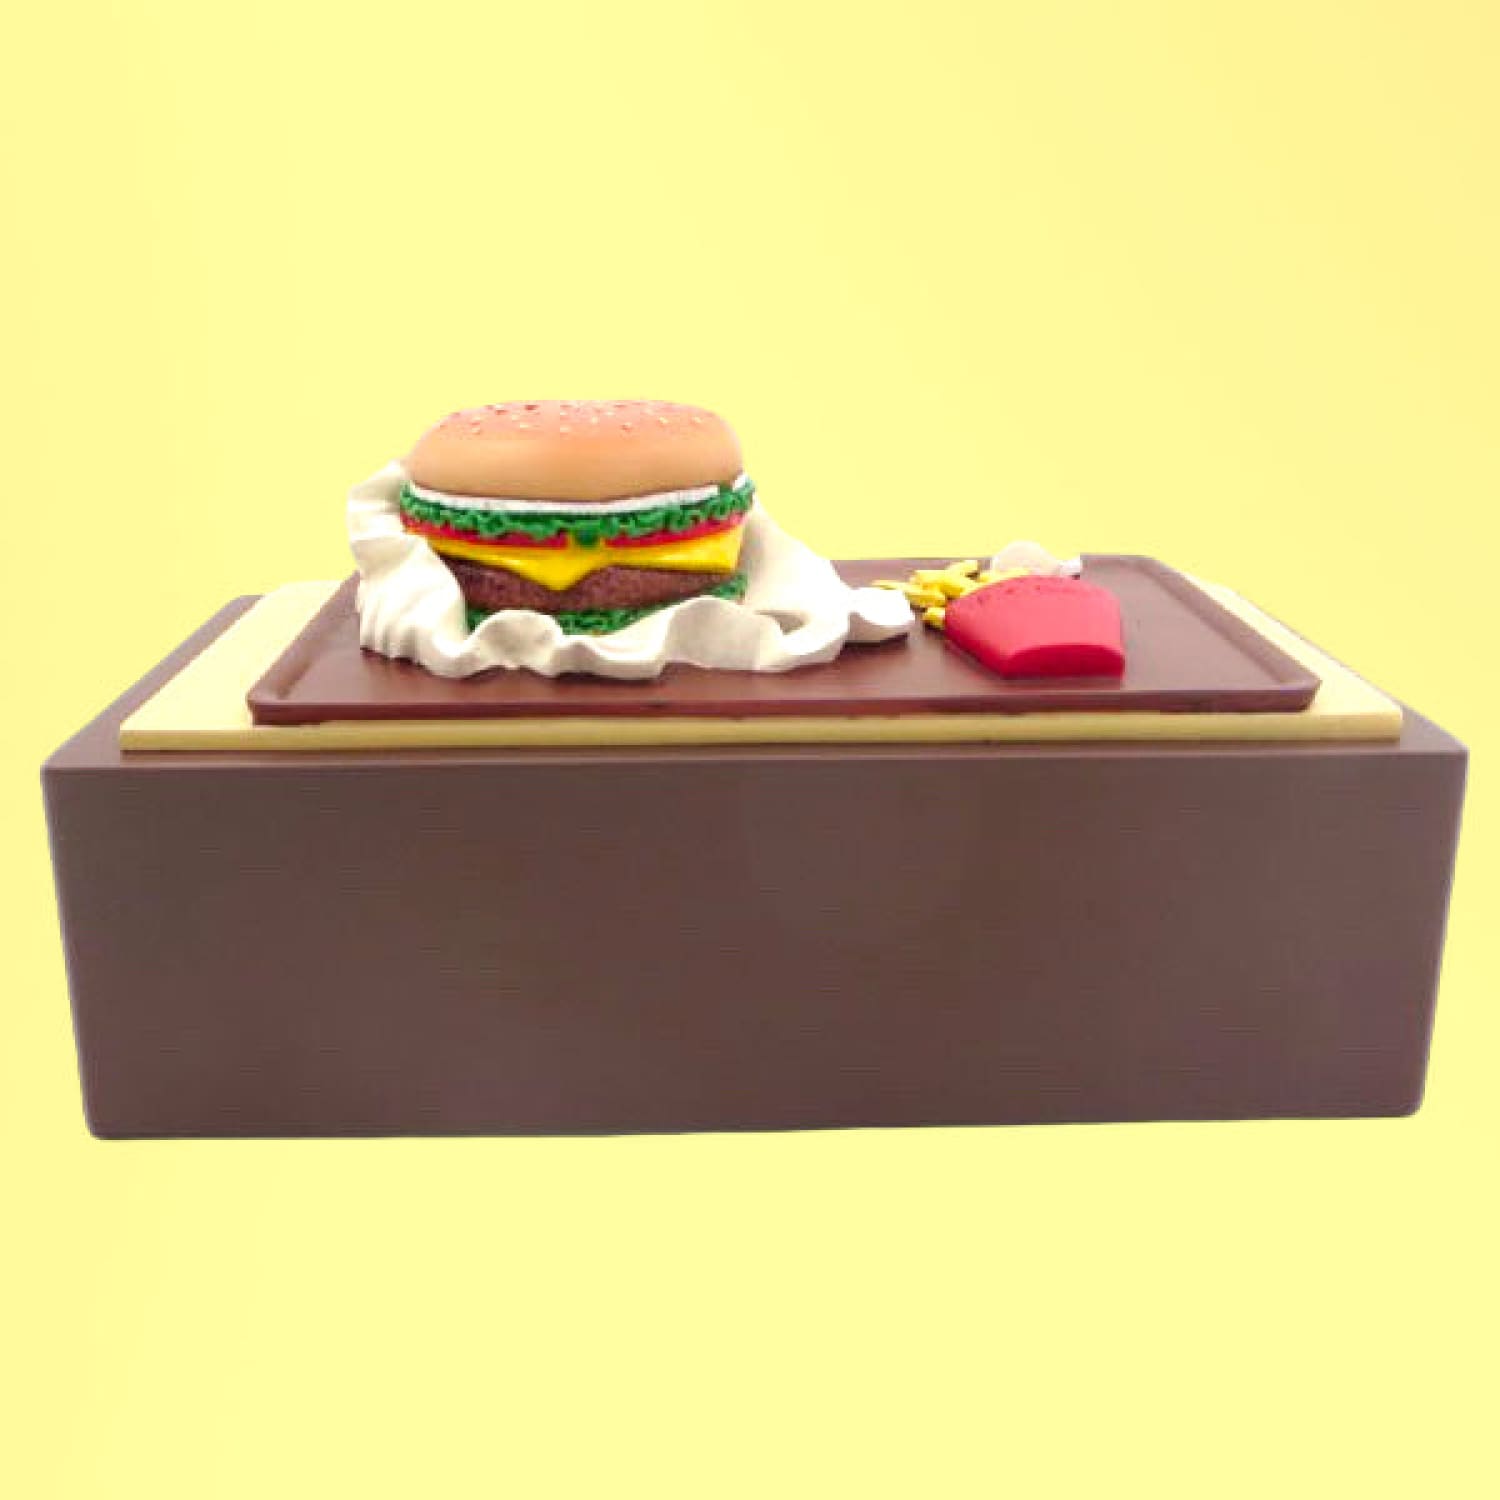 Hamburger & Fries Tissue Box Cover Accent Decor - Fake Food